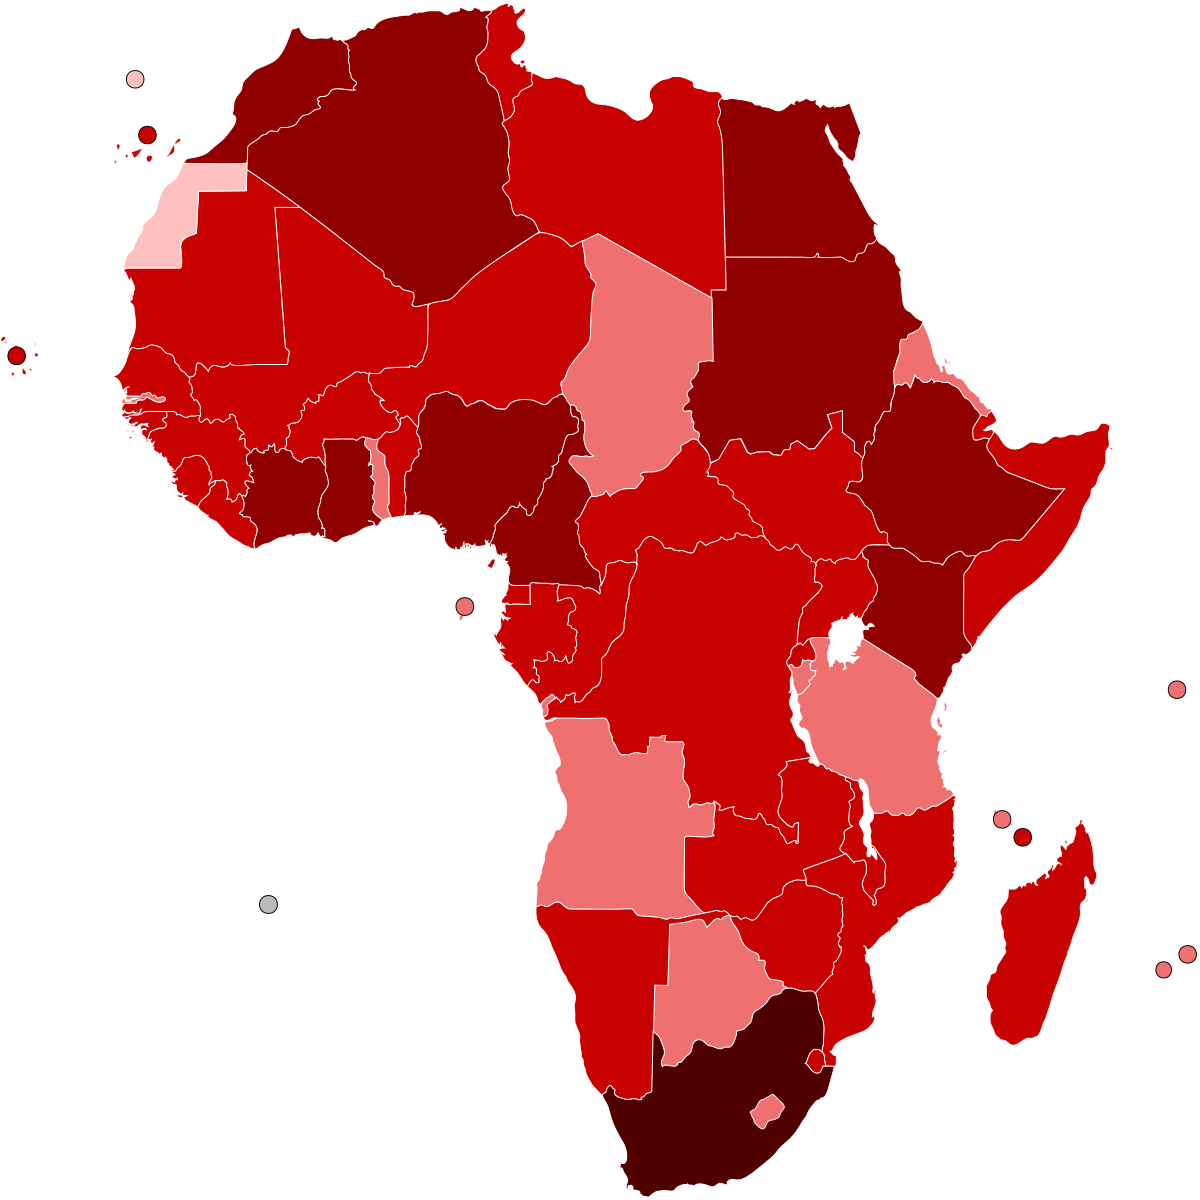 COVID-19 pandemic in Africa - Wikipedia